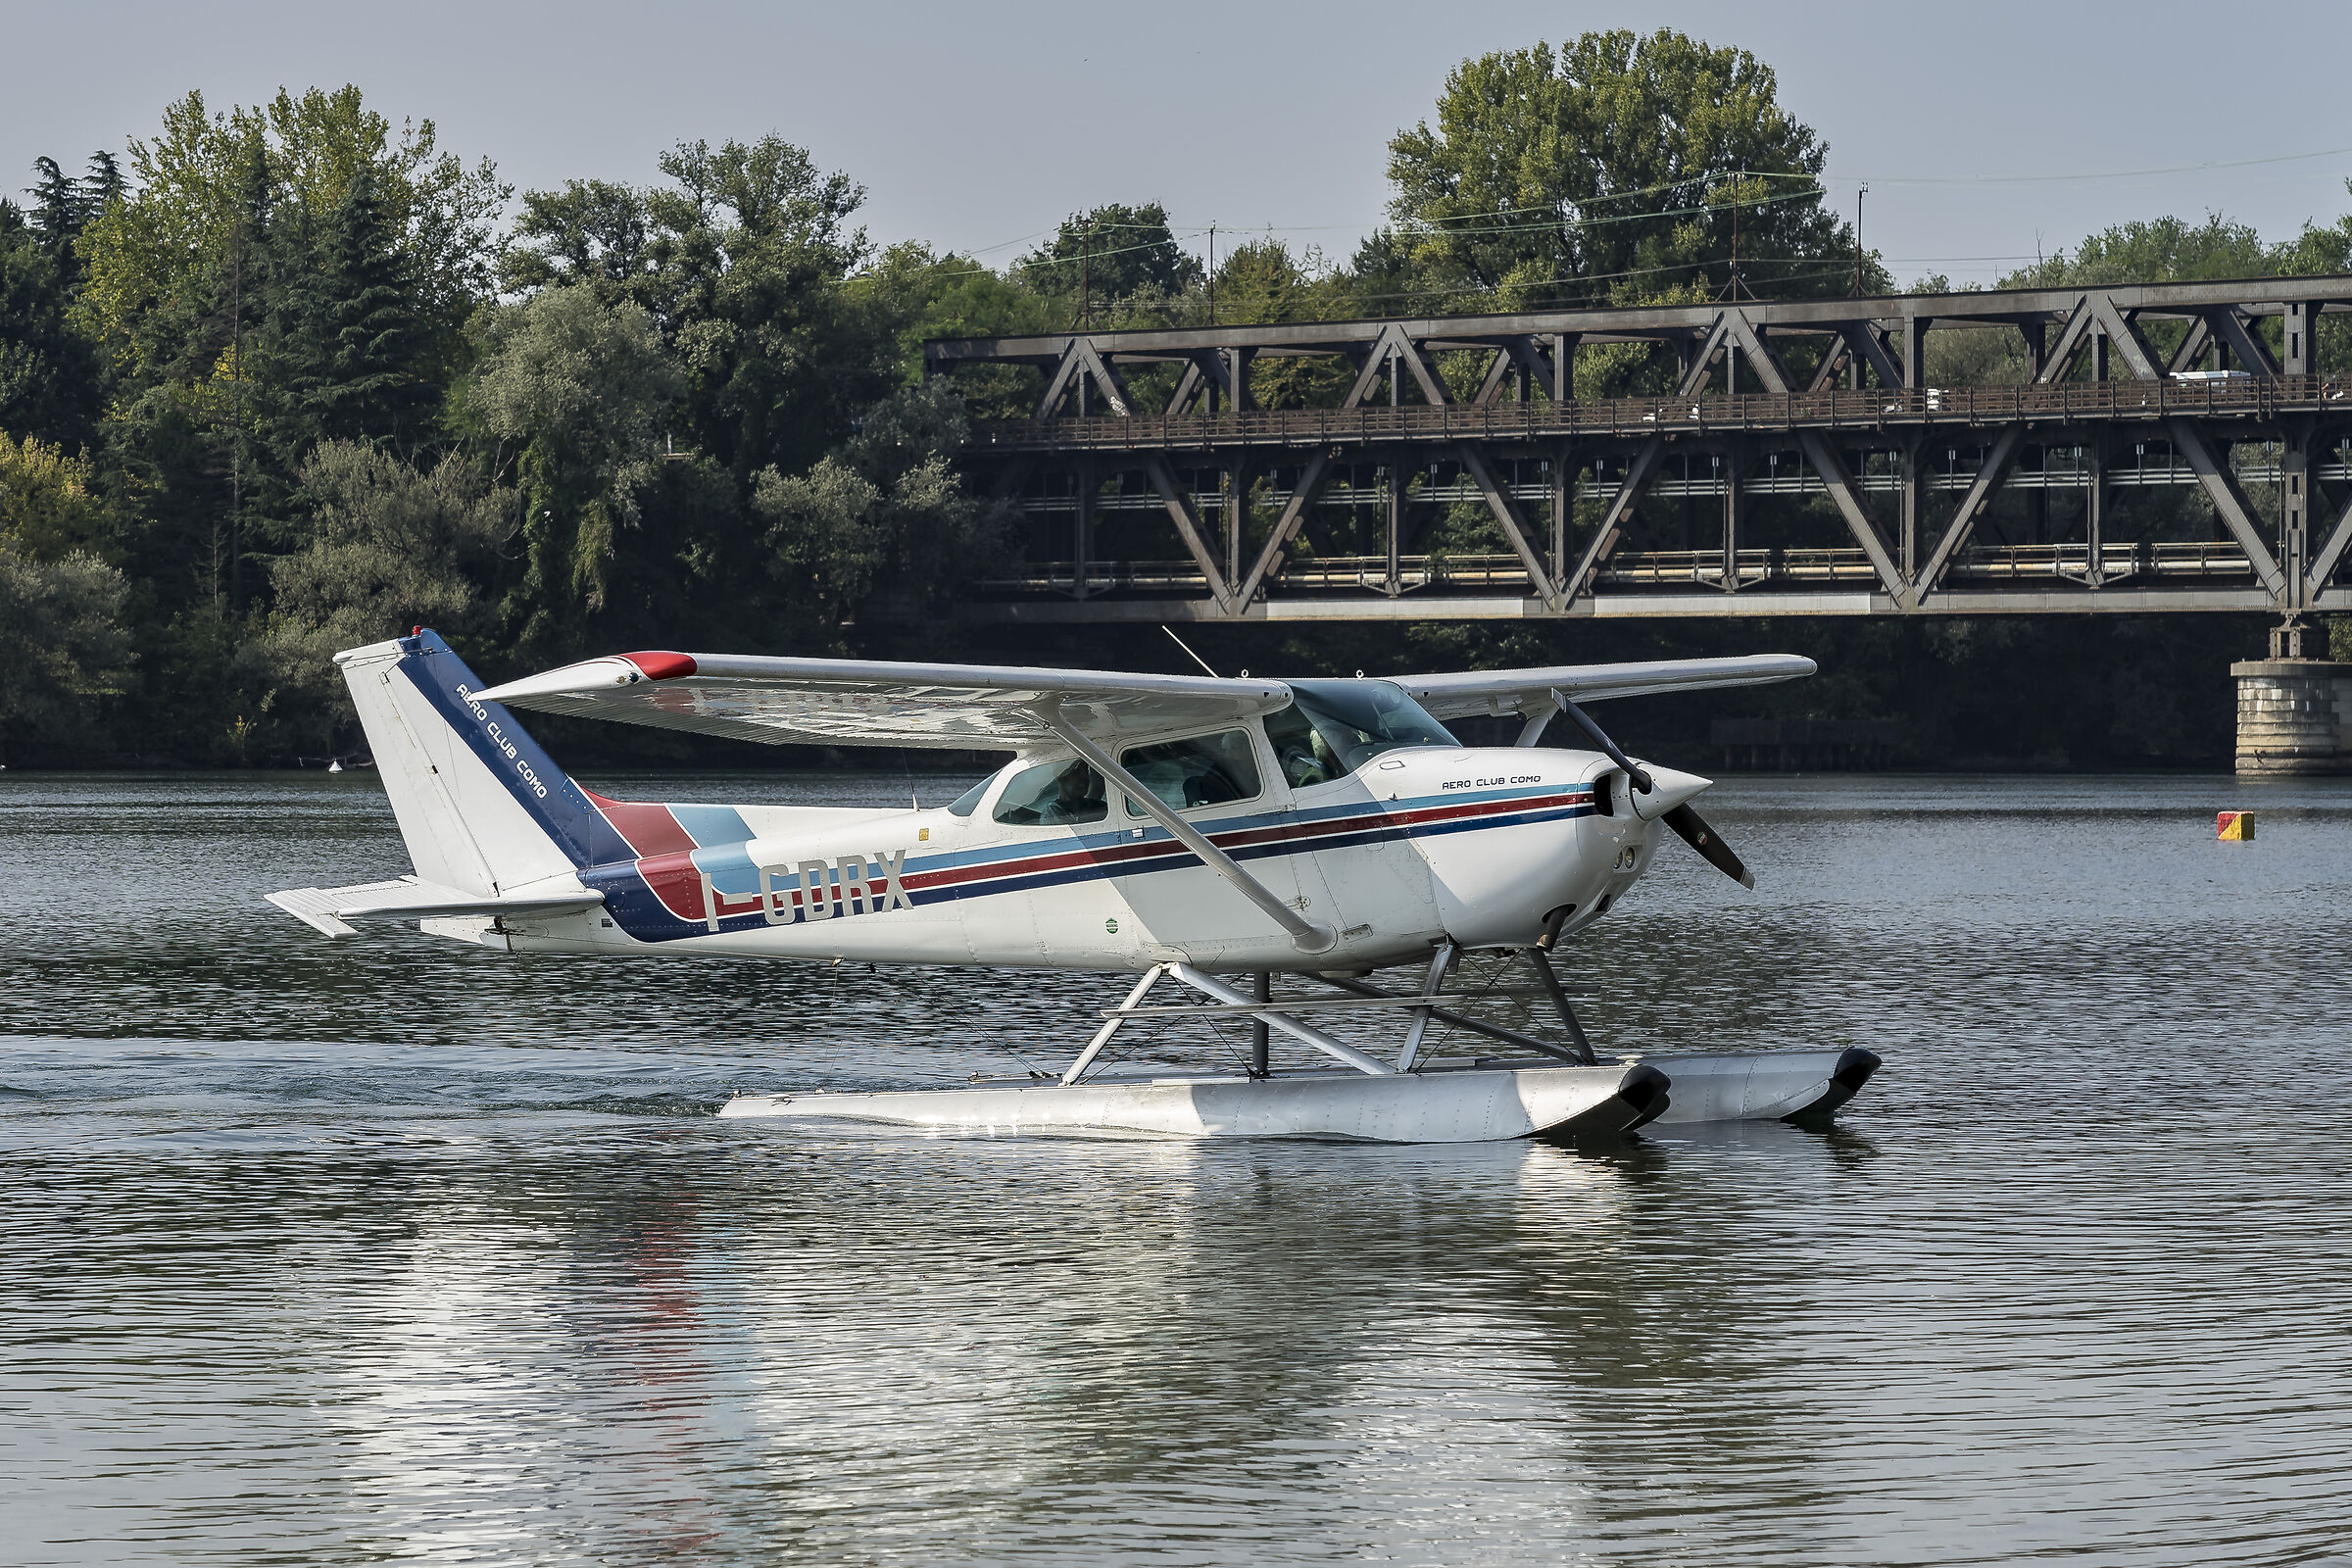 Attracco del Cessna 172 “Skyhawk” i-gdrx al pontile - 2...